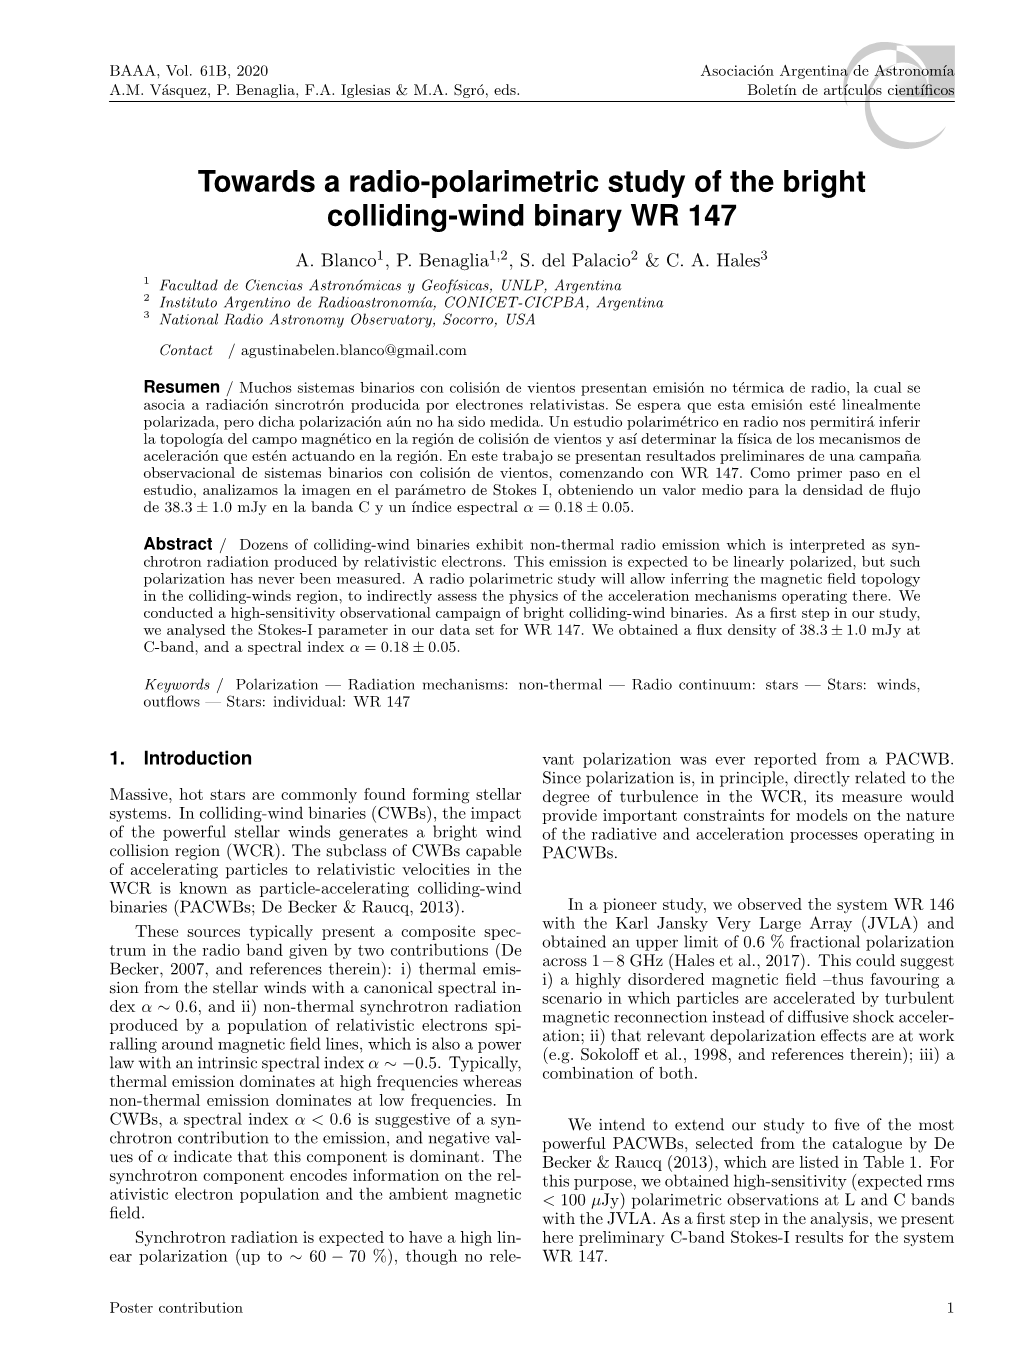 Towards a Radio-Polarimetric Study of the Bright Colliding-Wind Binary WR 147